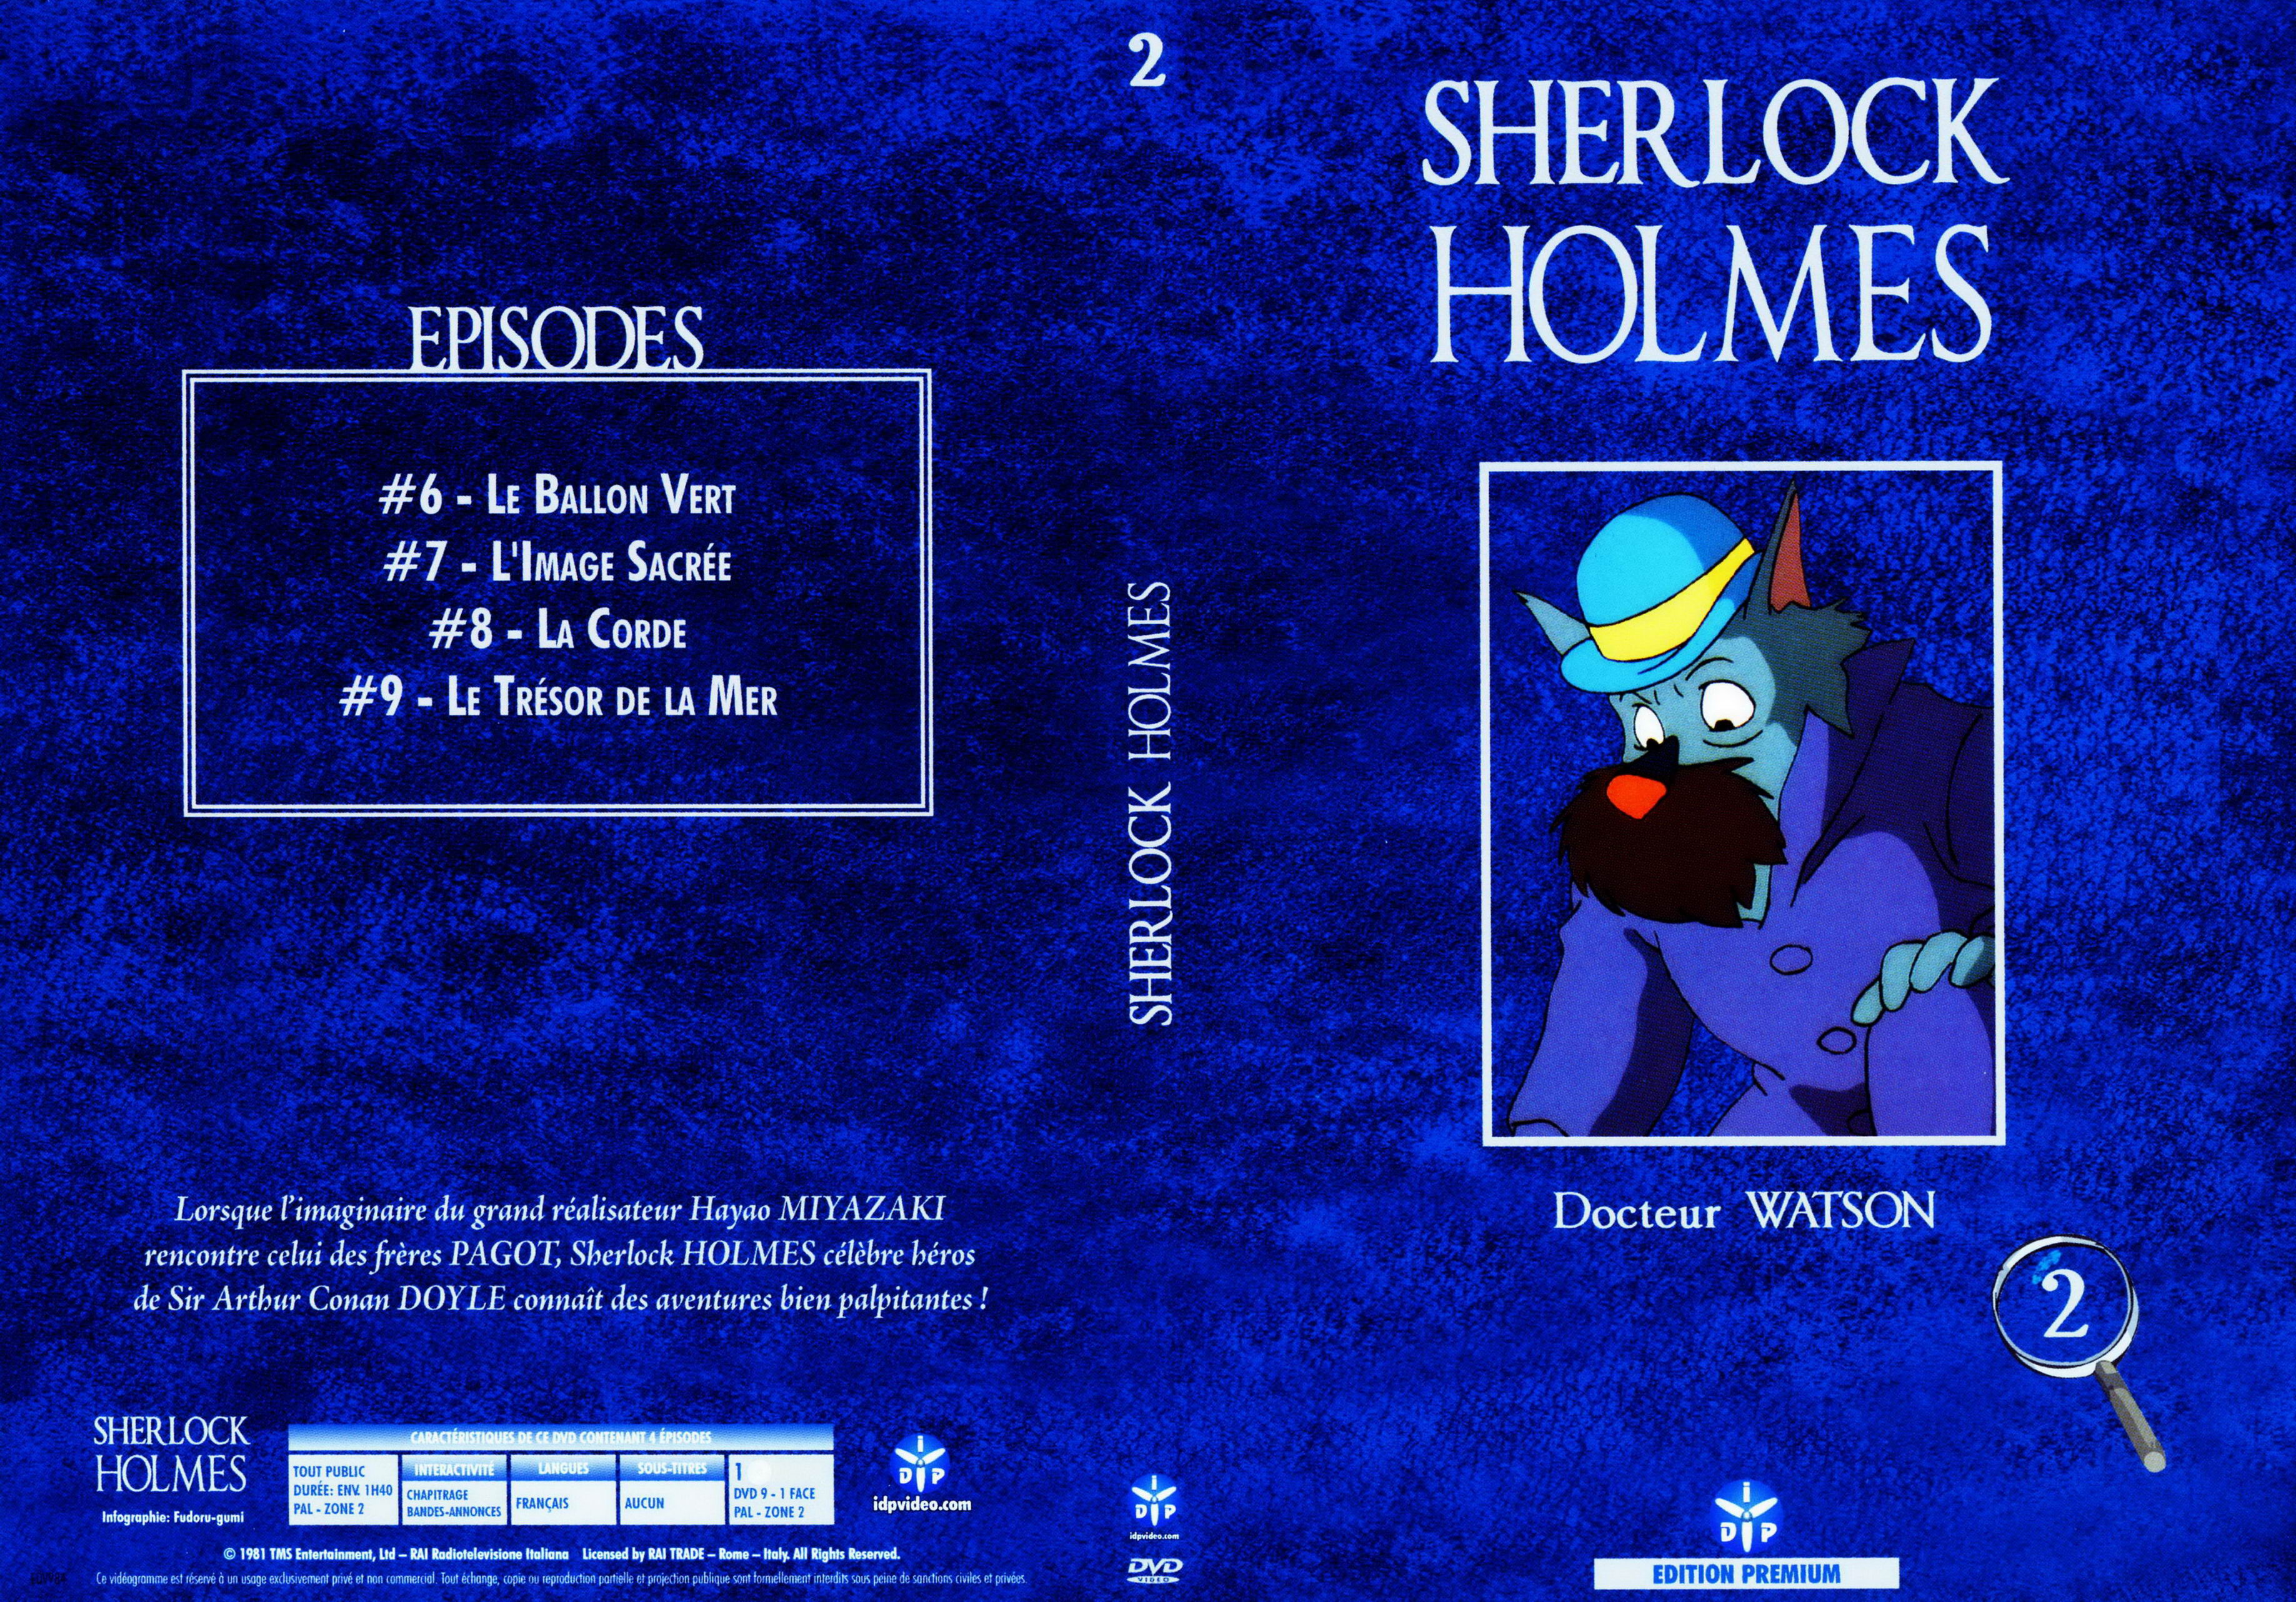 Jaquette DVD Sherlock Holmes vol 2 v2